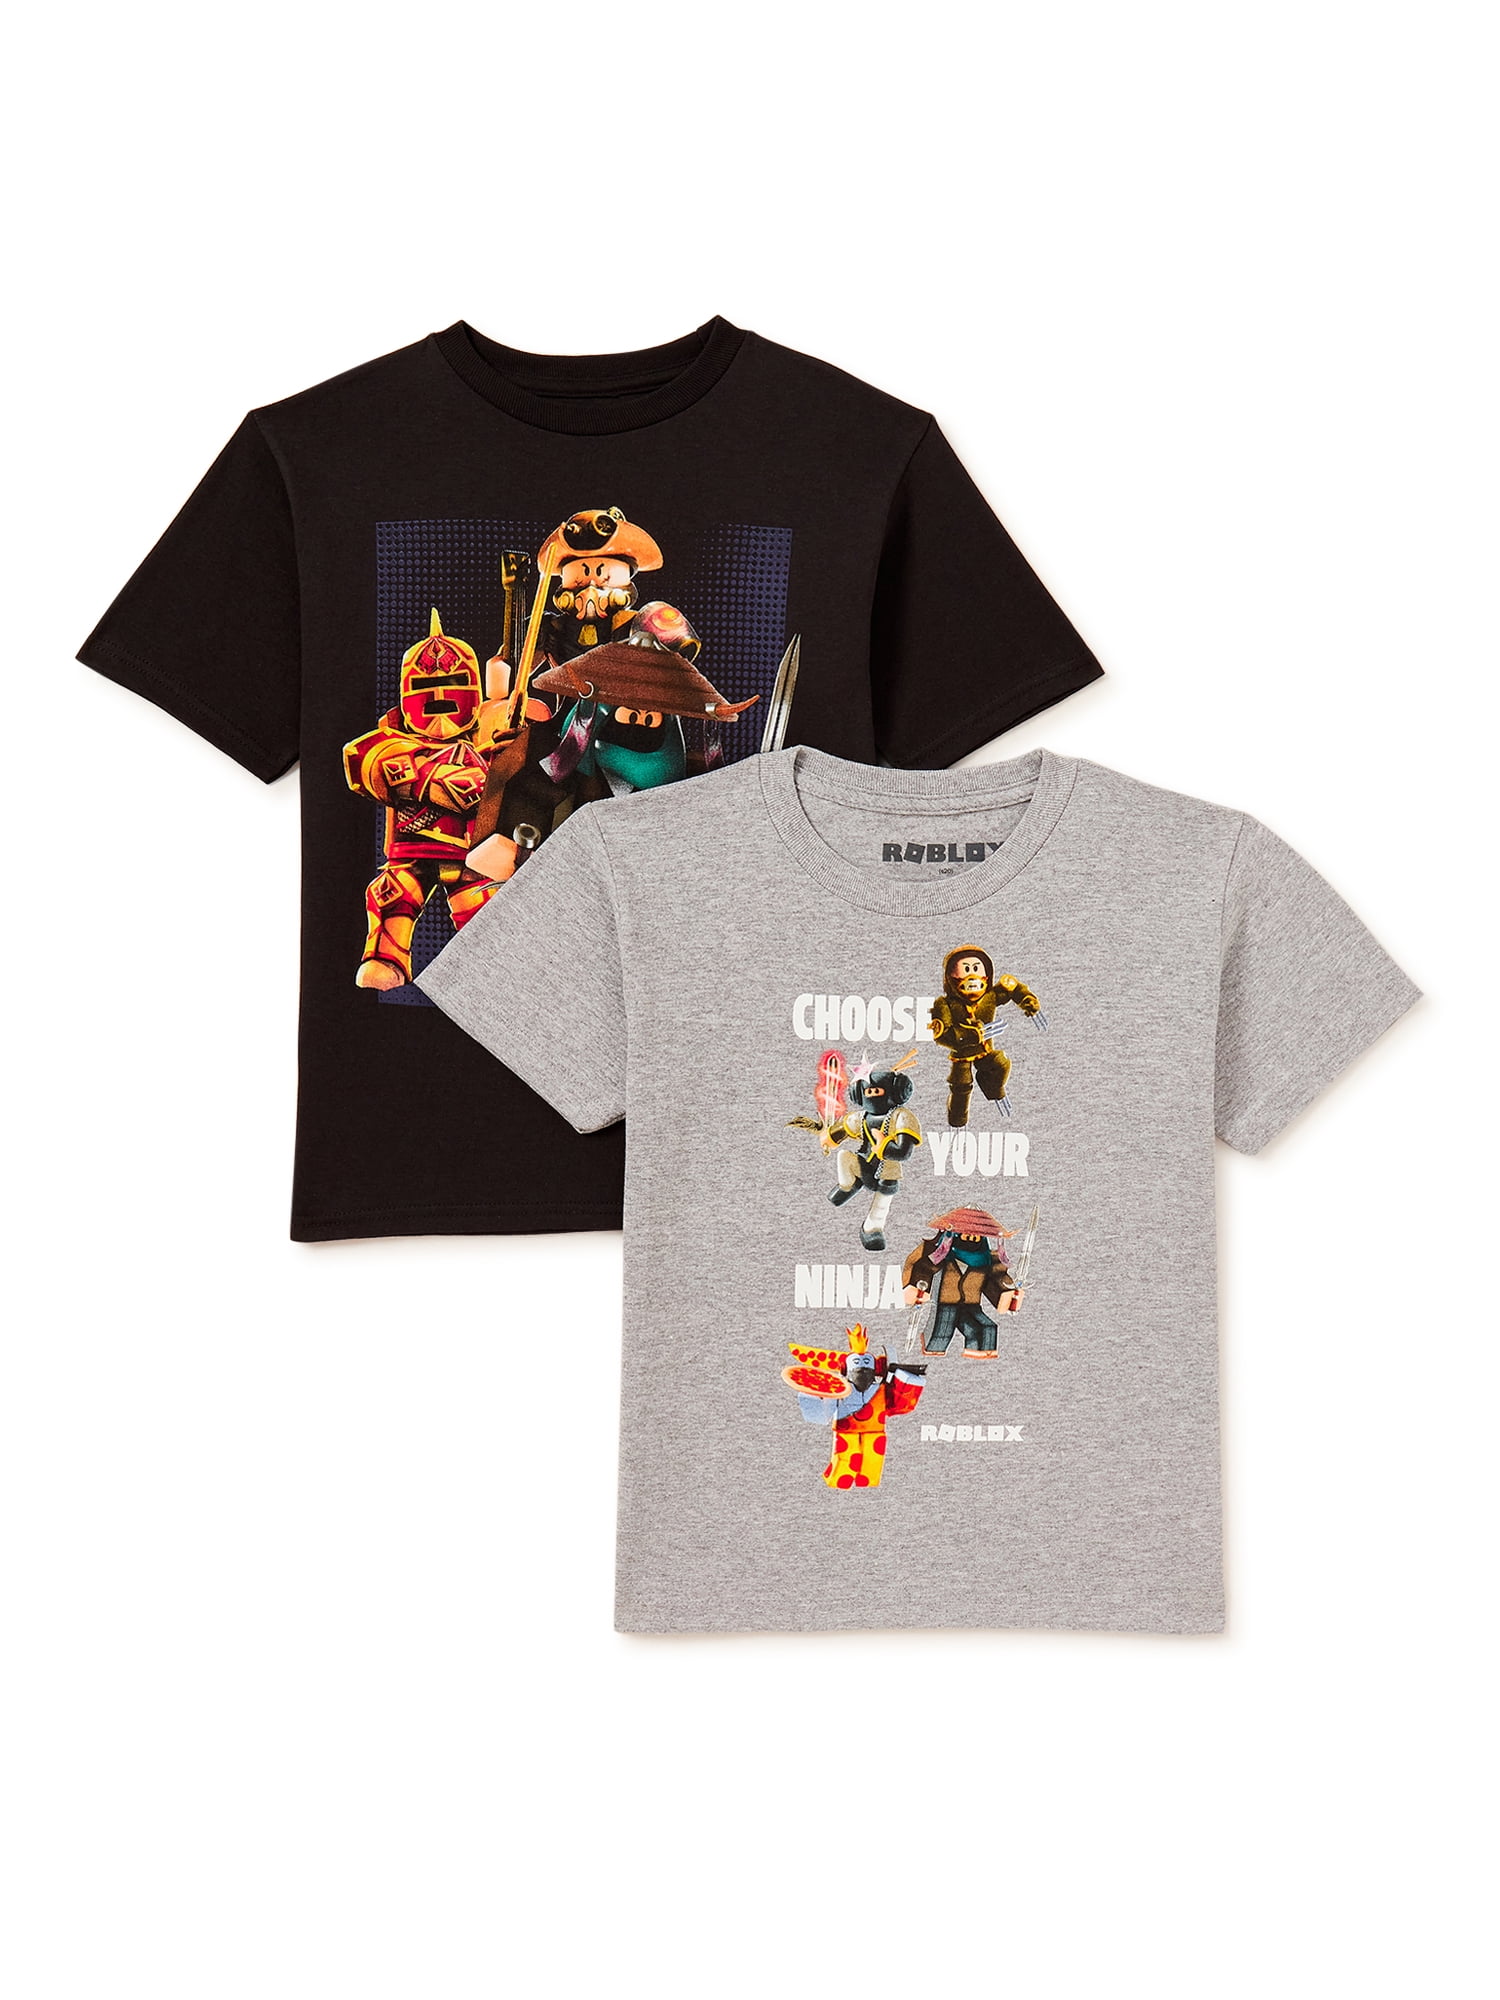 Roblox Roblox Boys Ninja And Warrior Character Graphic T Shirts 2 Pack Size 4 18 Walmart Com Walmart Com - roblox ninja shirt